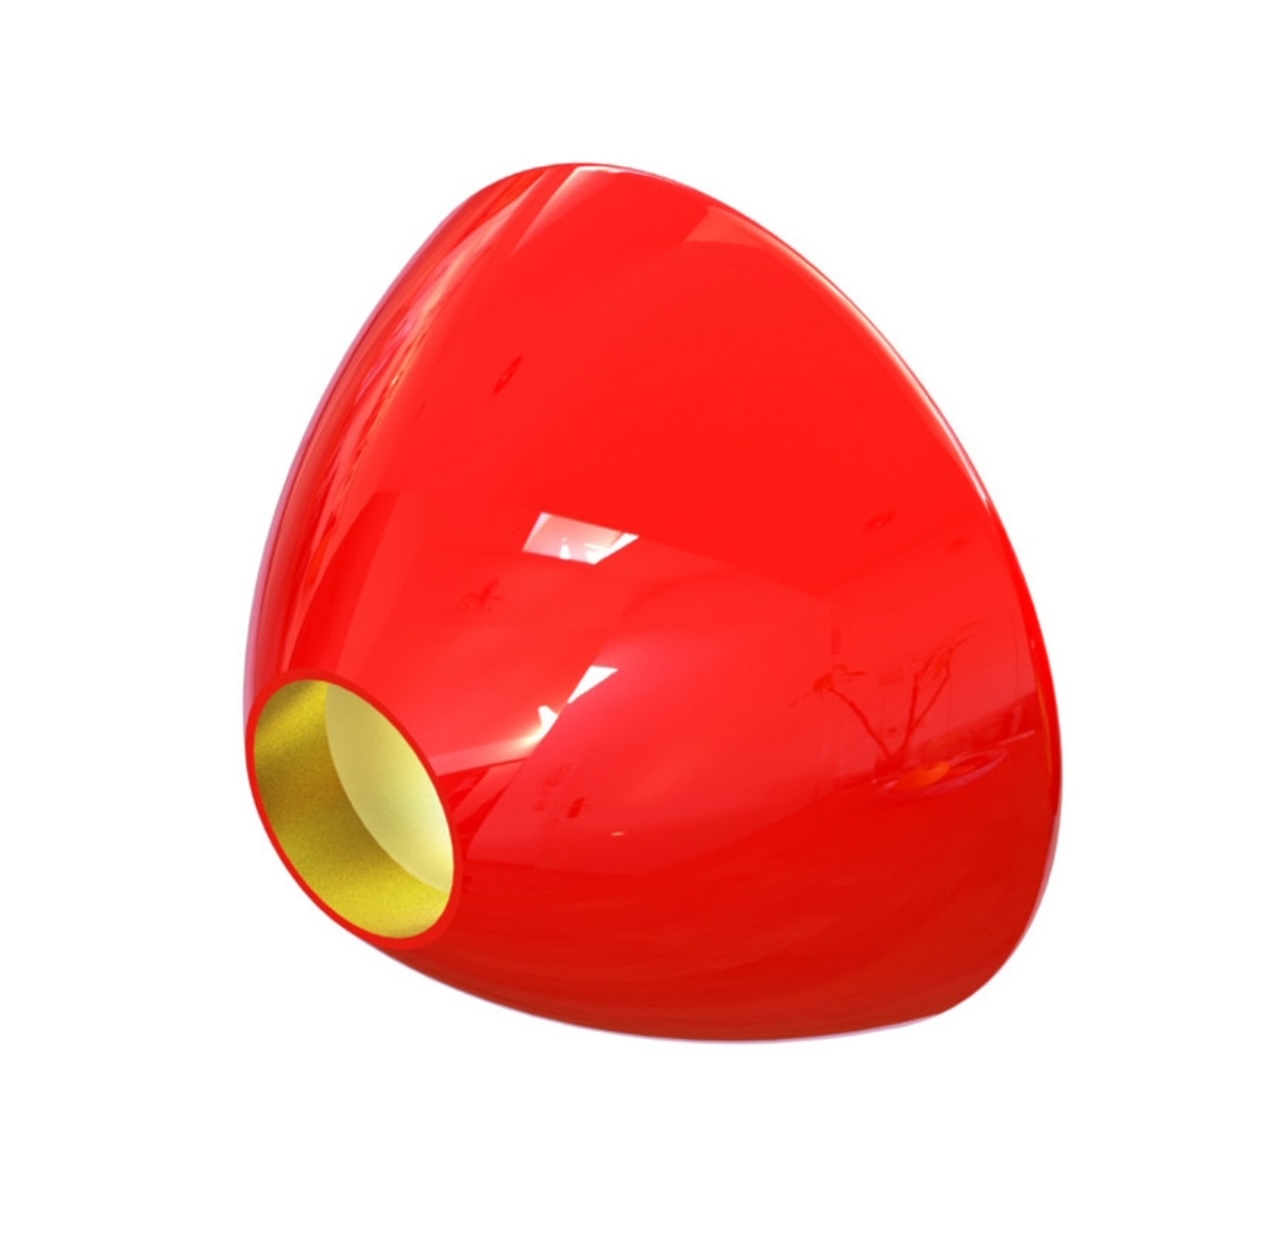 Pro Sportfisher Conehead - Small - Red